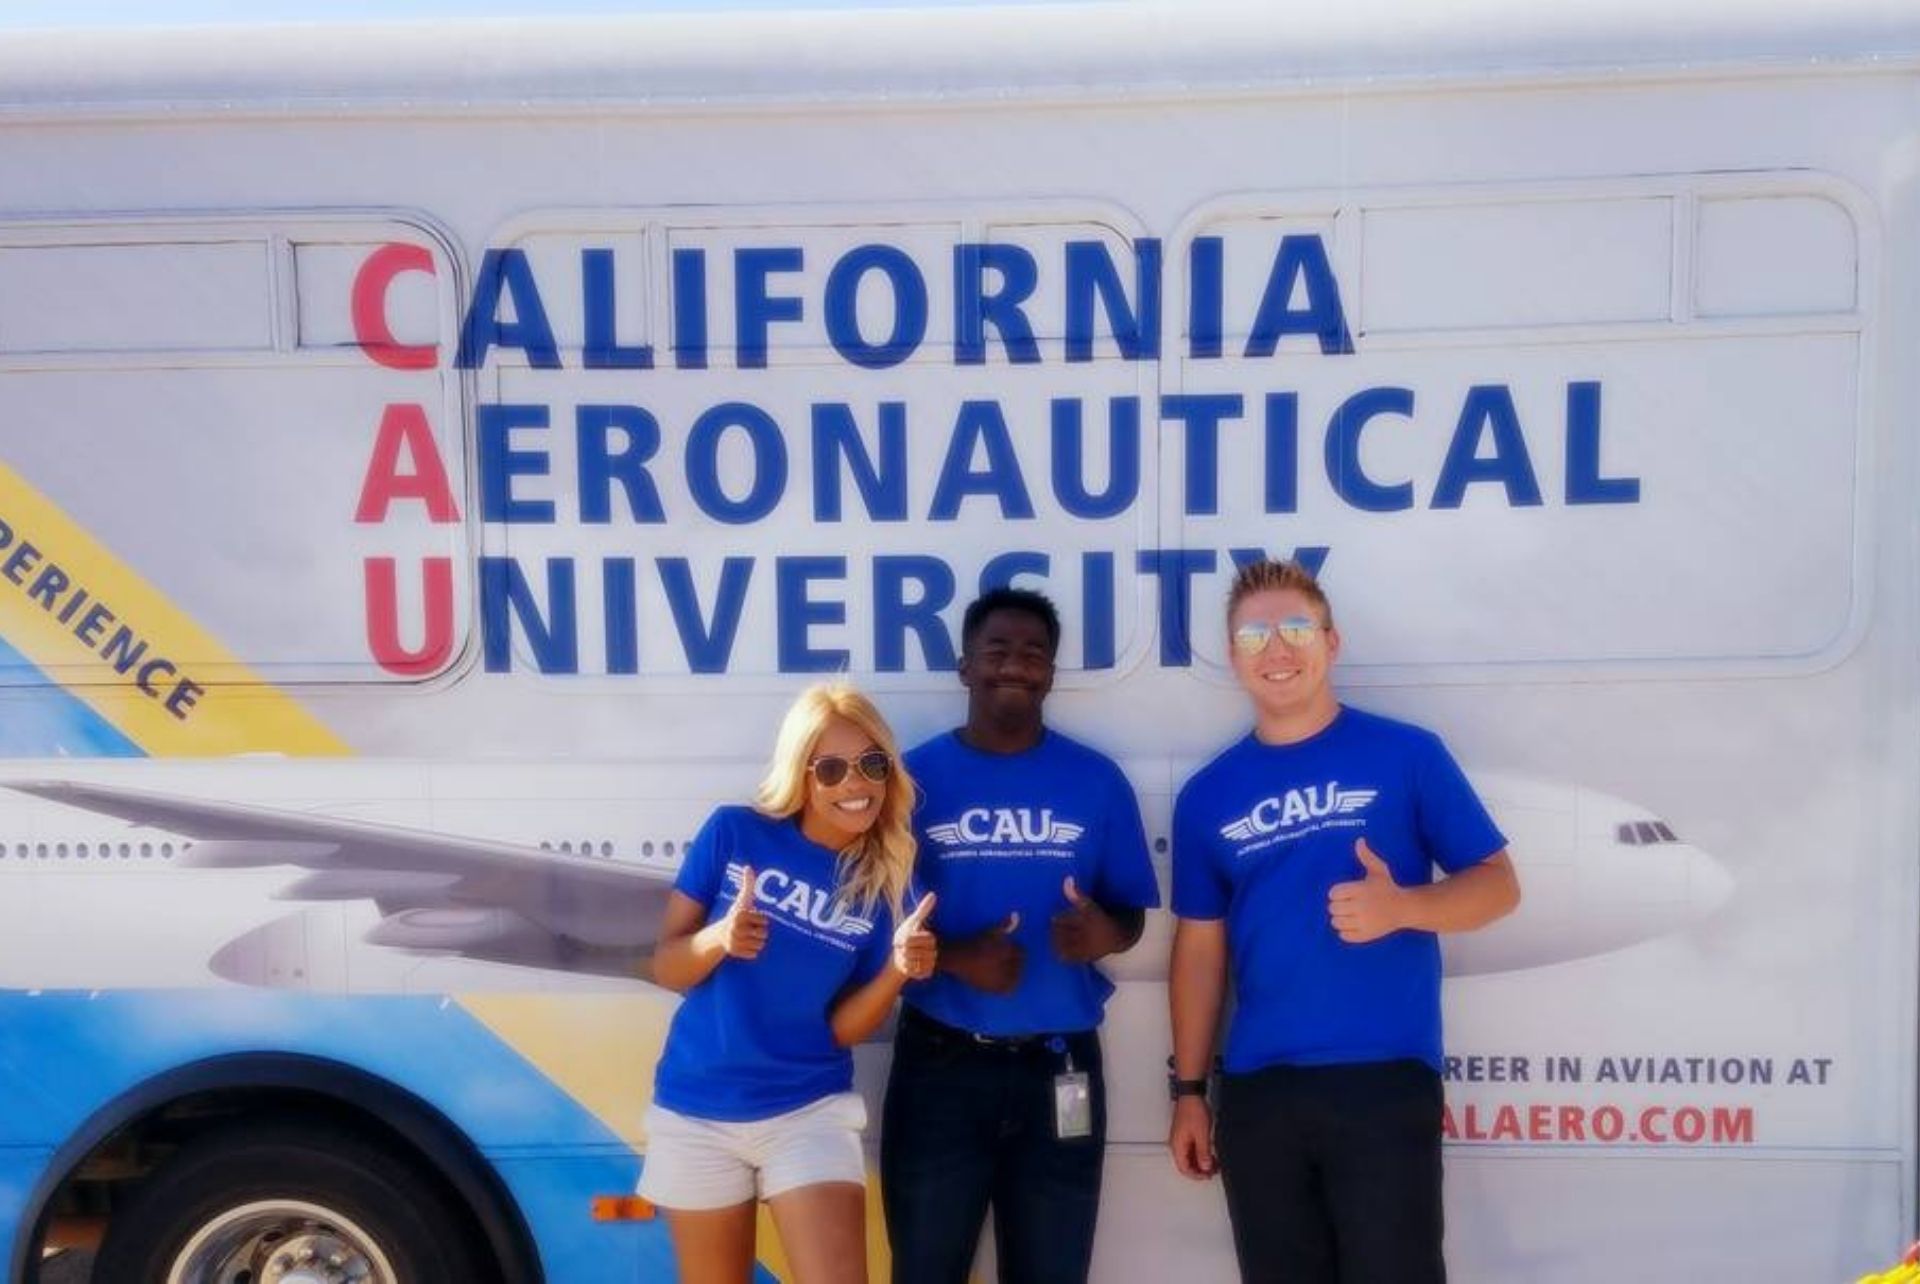 CAU Bus at Events - California Aeronautical University